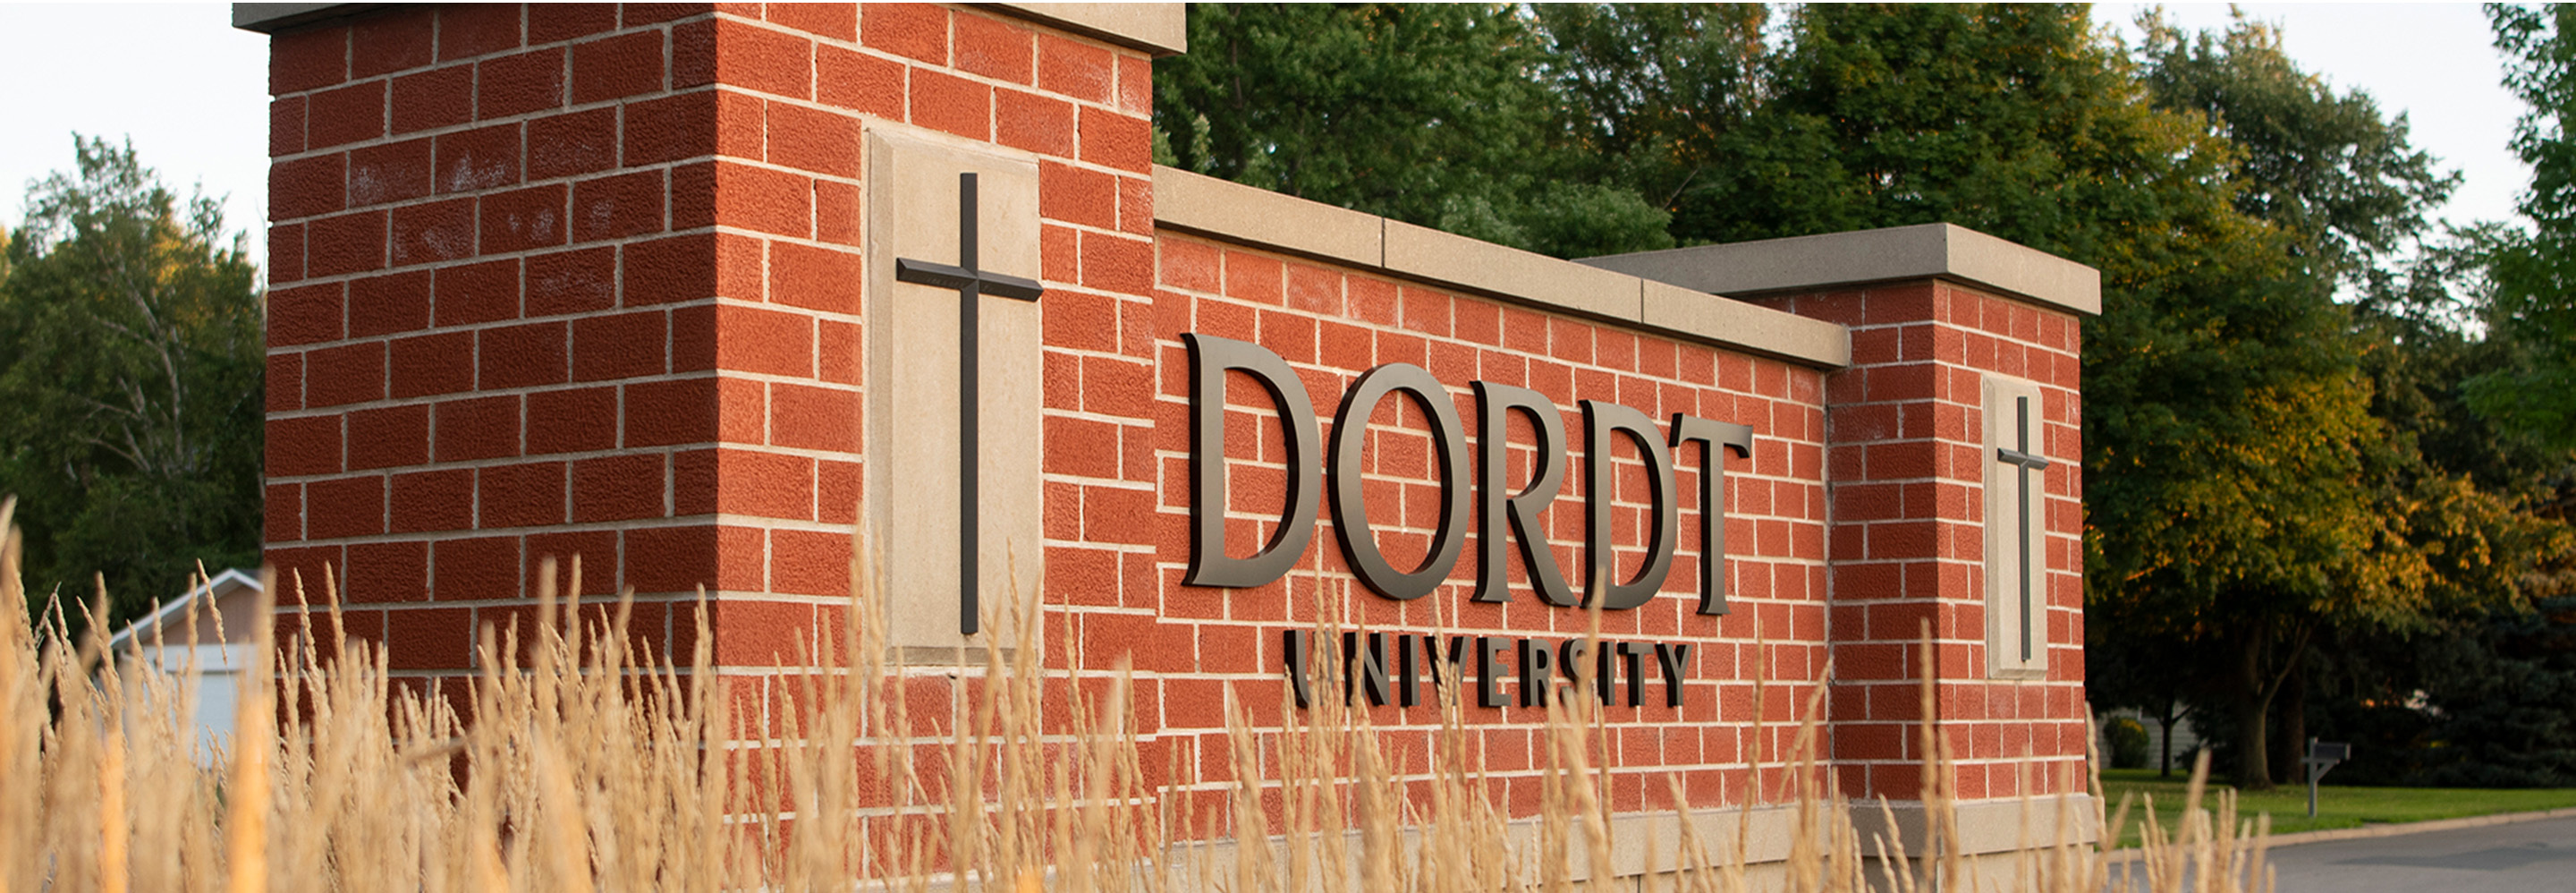 The Dordt University brick sign